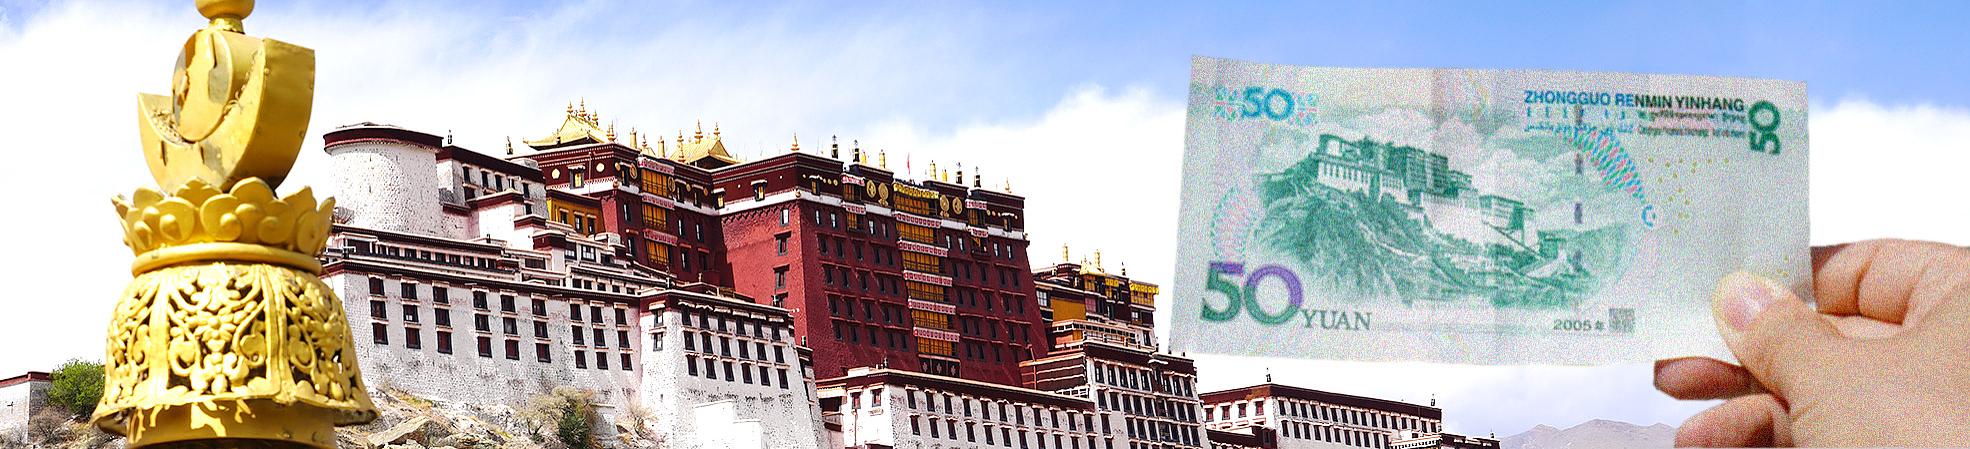 Potala Palace in Tibet and 50 yuan